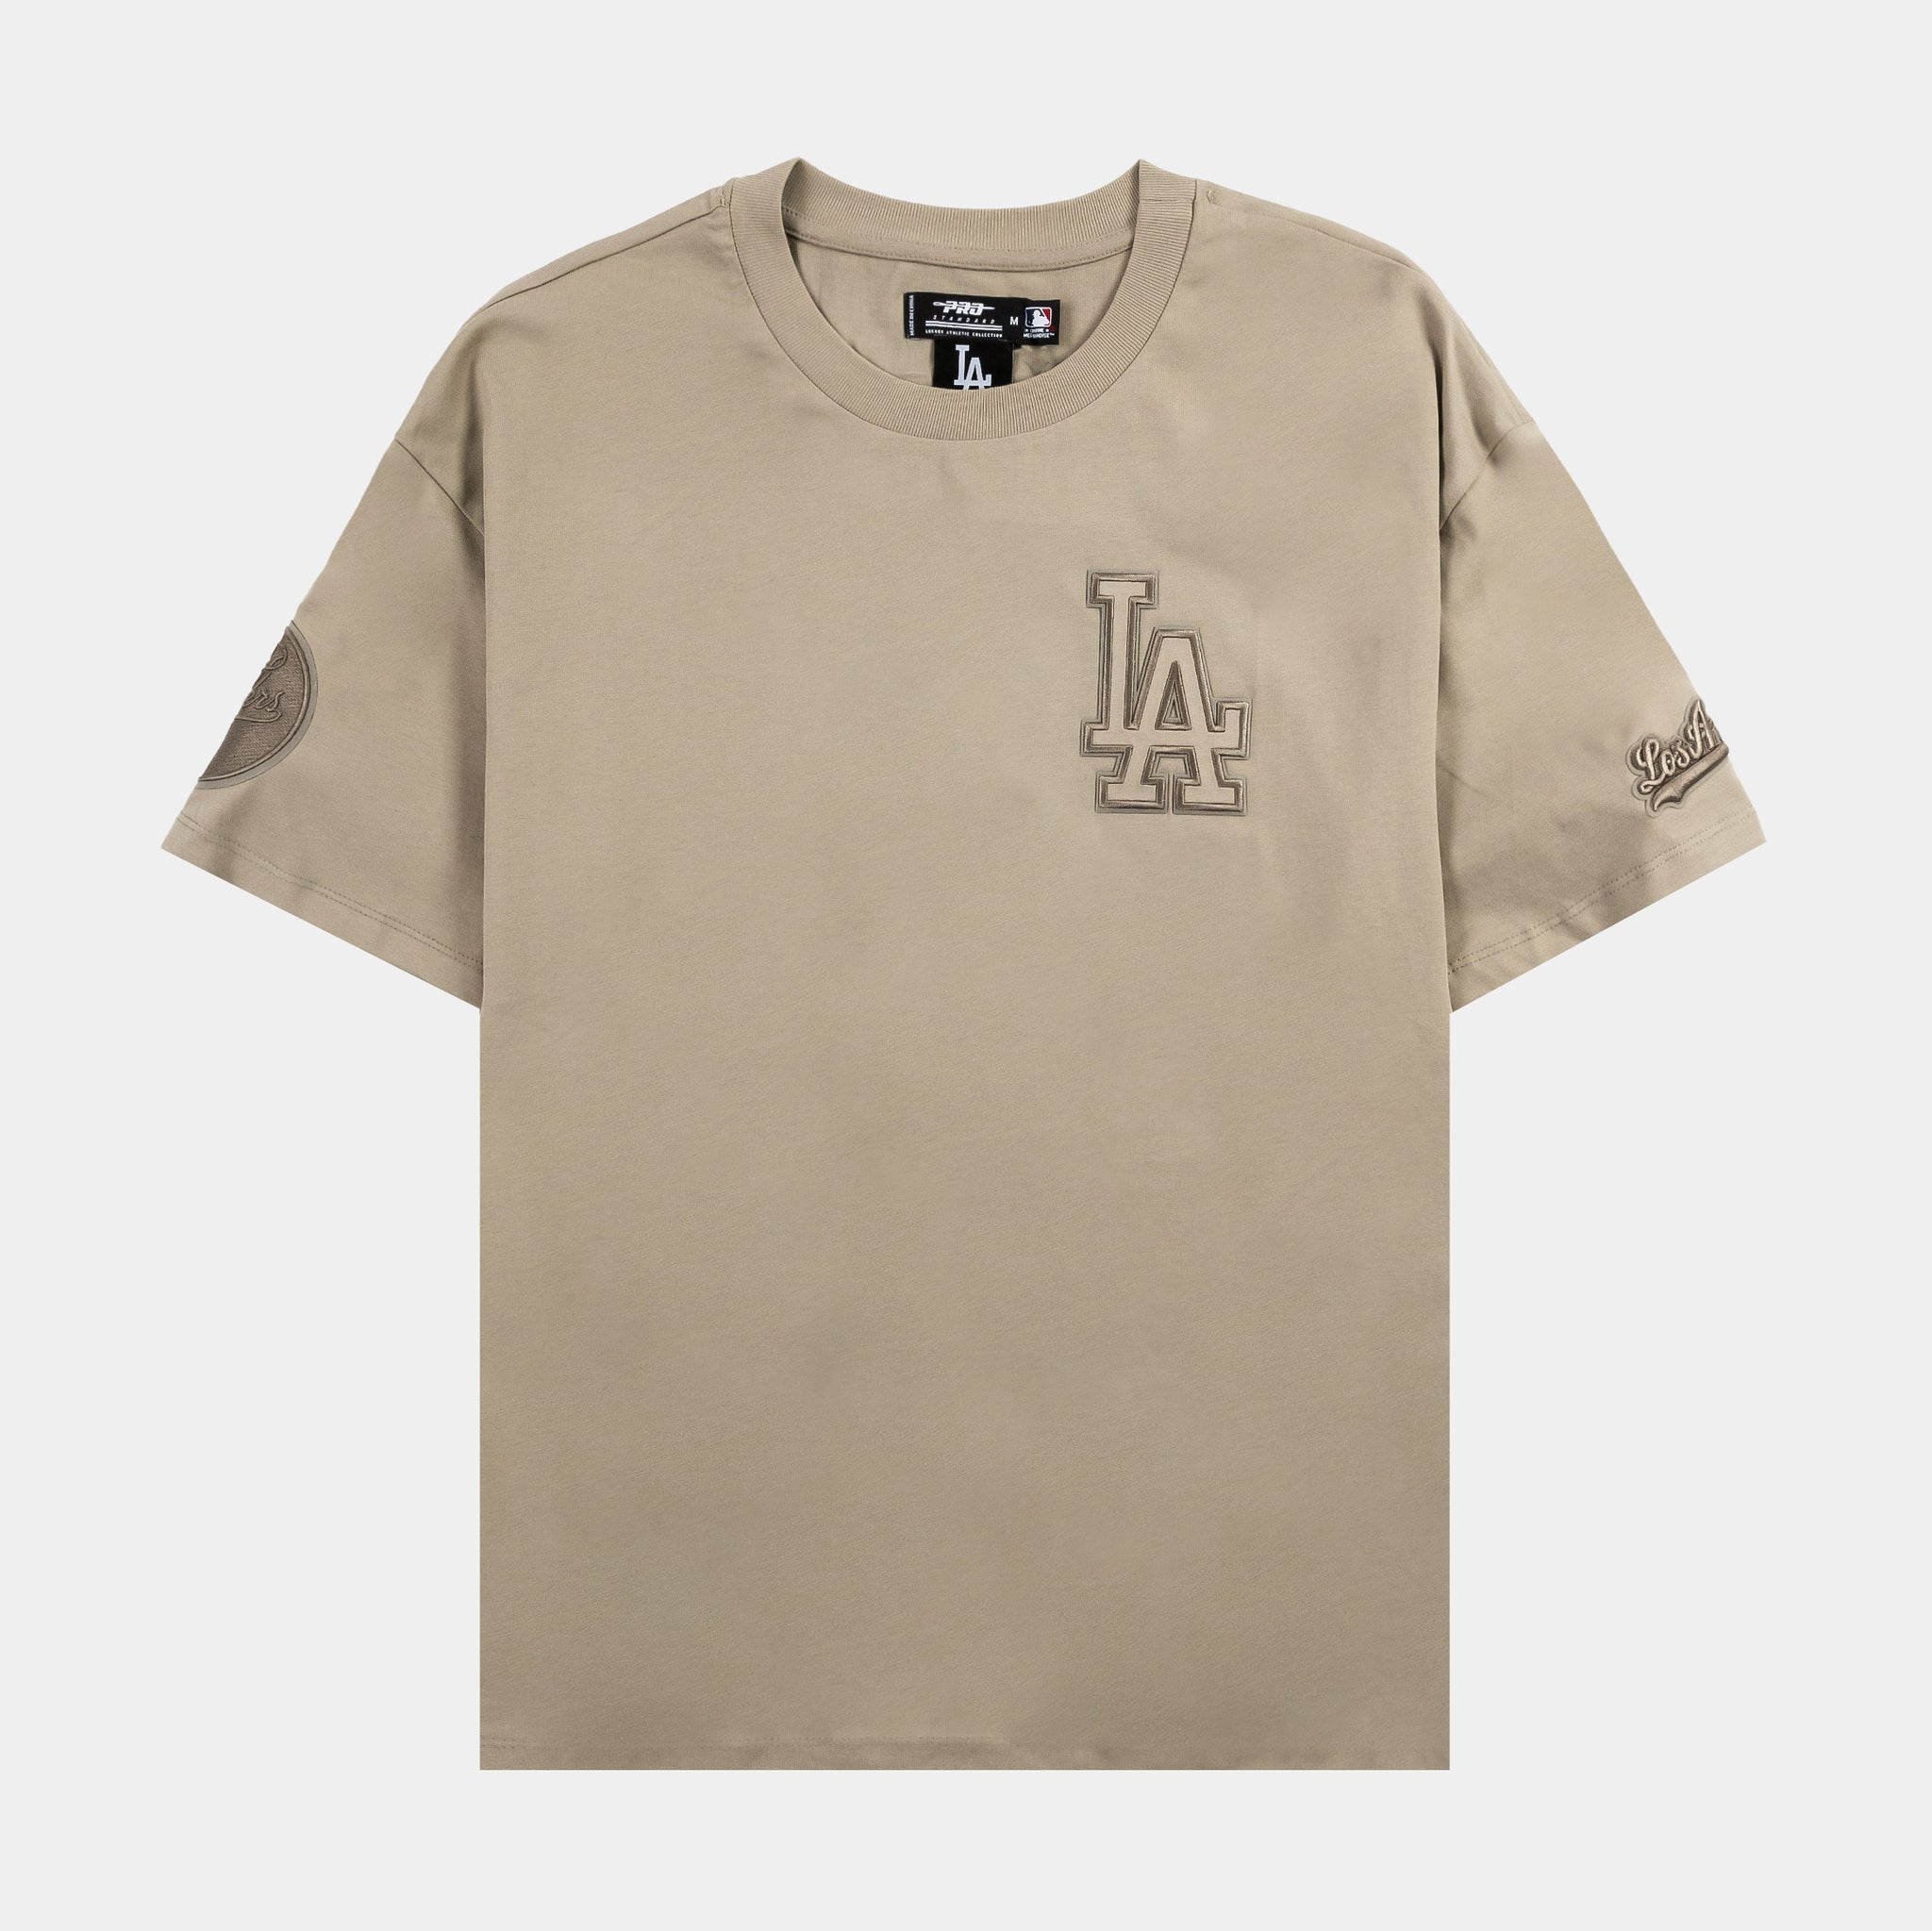 Pro Standard Los Angeles Dodgers Neutral Mens Short Sleeve Shirt